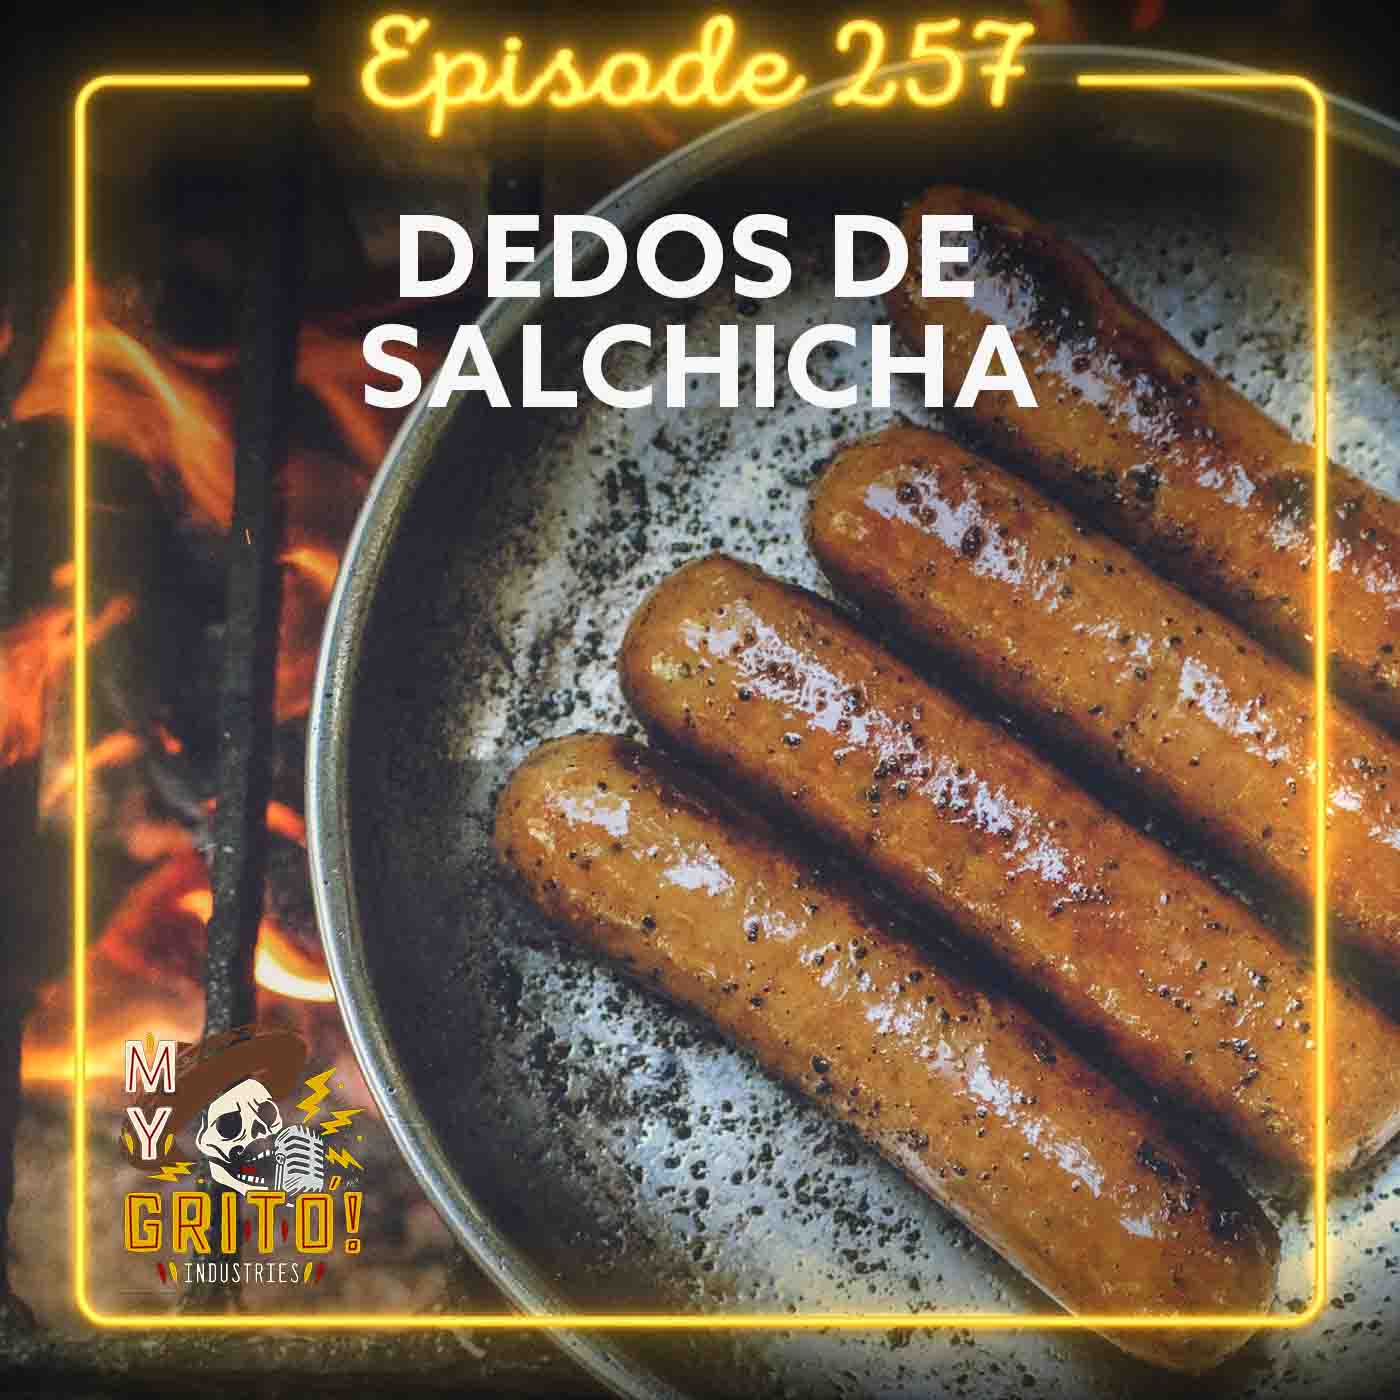 Episode 257 – Dedos de Salchicha